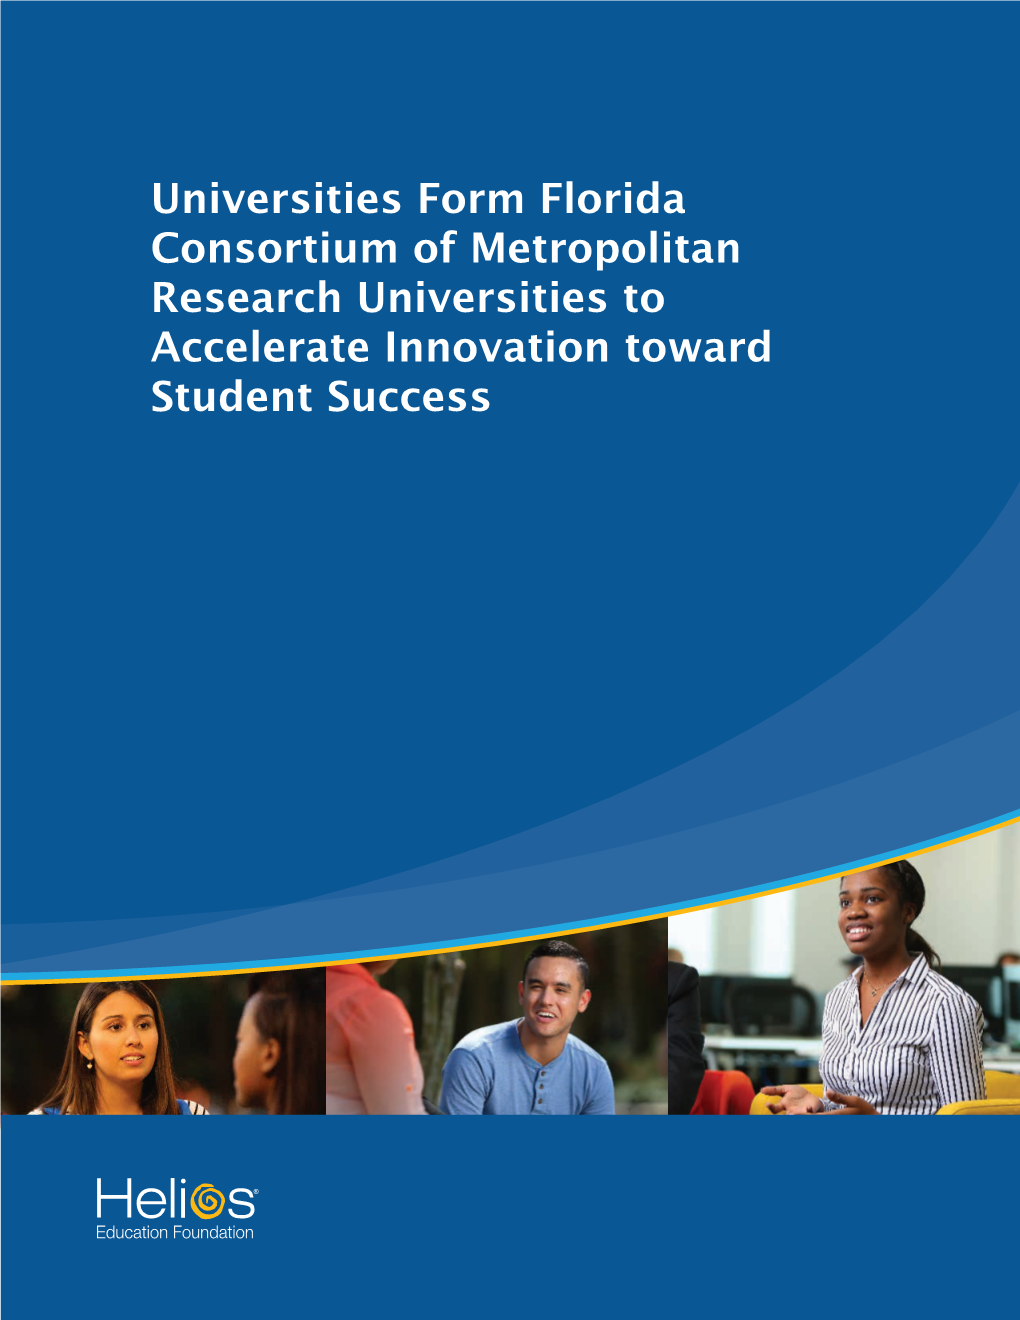 Universities Form Florida Consortium of Metropolitan Research